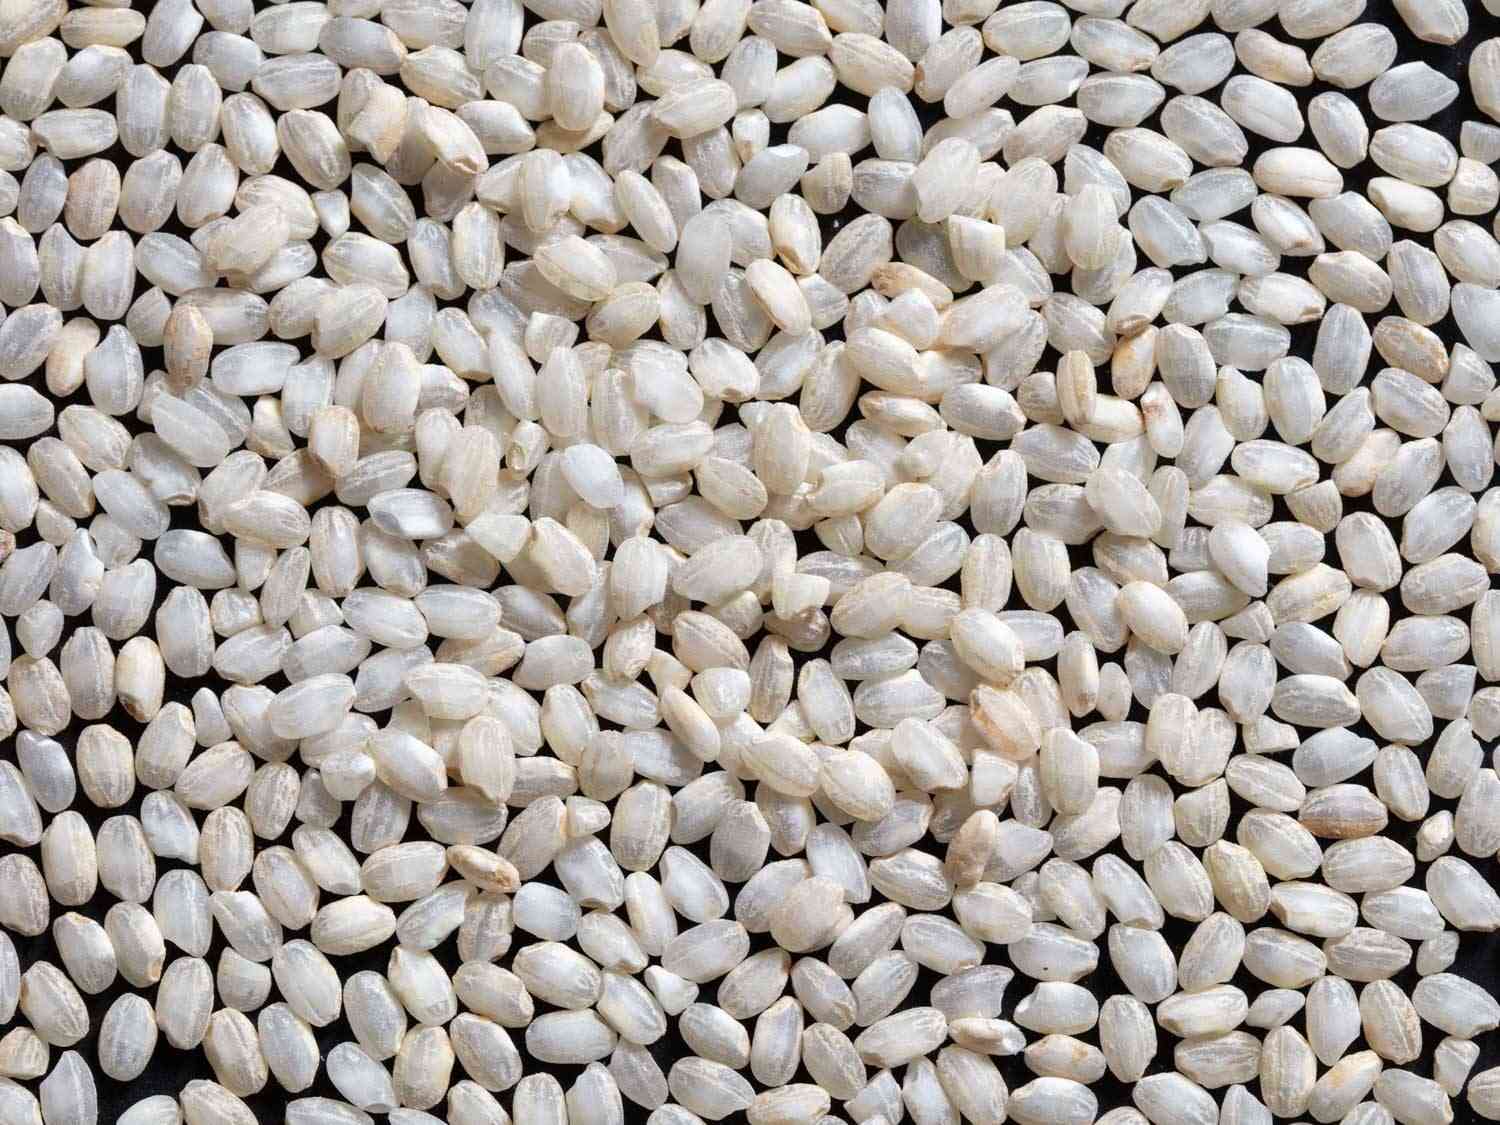 Macro view of calaspara rice